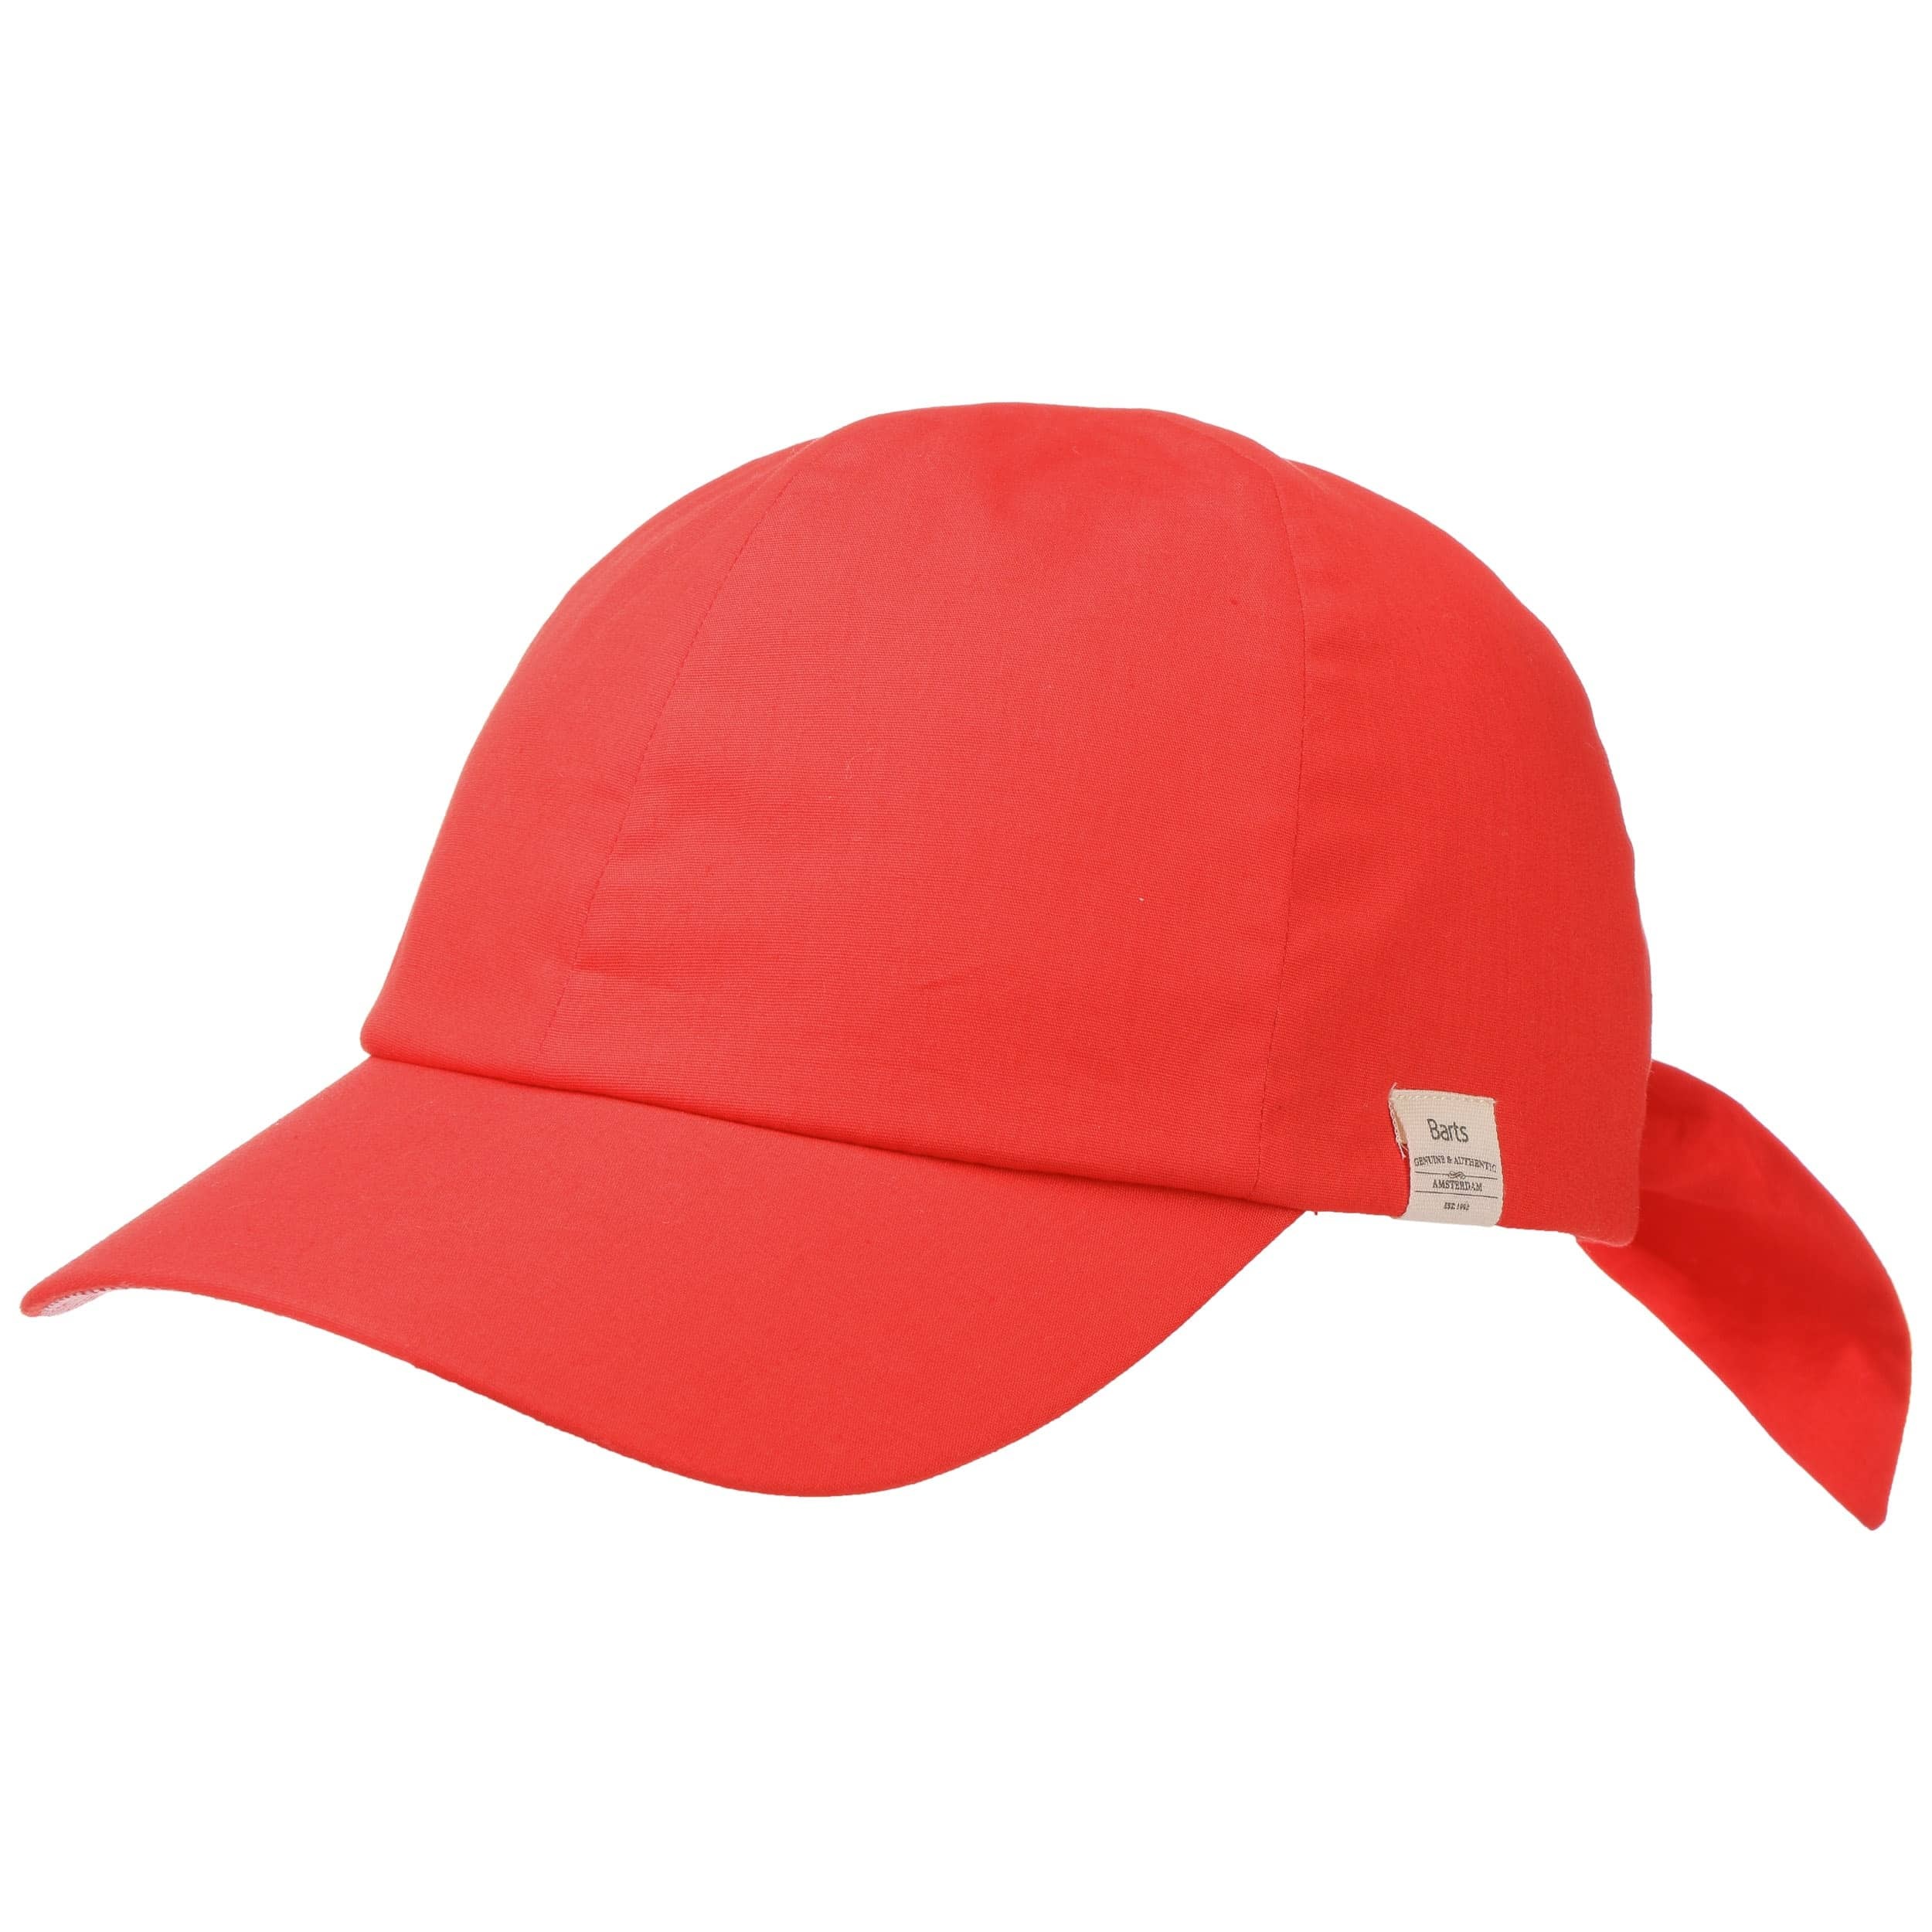 Wupper Stripes Cap online Beanies Caps --> Barts & Hats, Hatshopping Shop by ▷